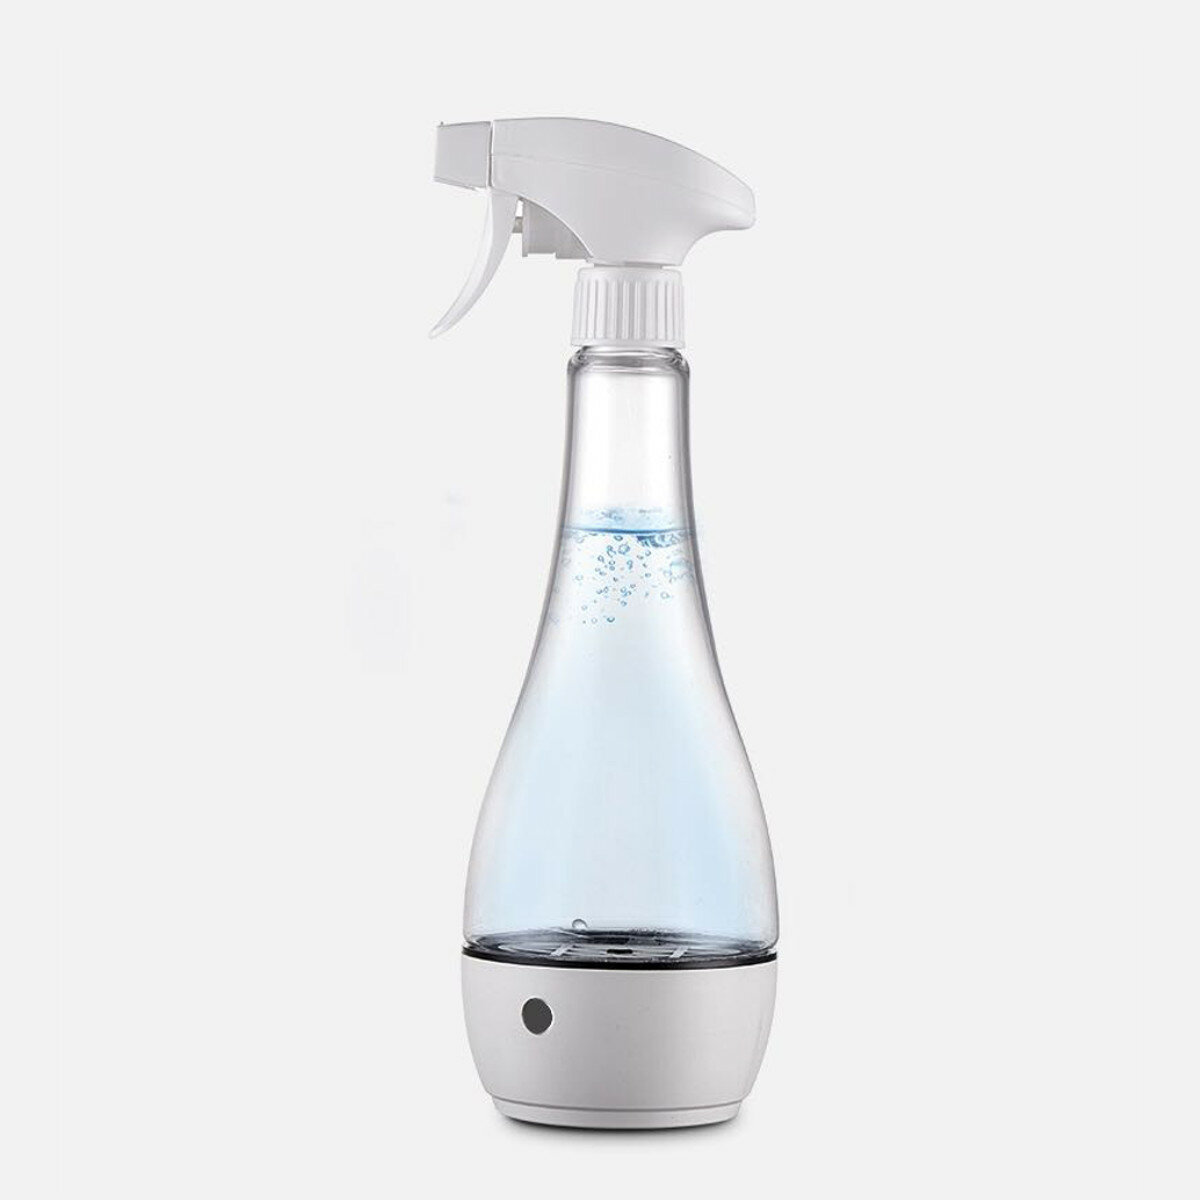 84 Disinfection Water Electrolytic Generator Disinfectant Liquid Hypochlorous Making Machine Sterilizer Sprayer